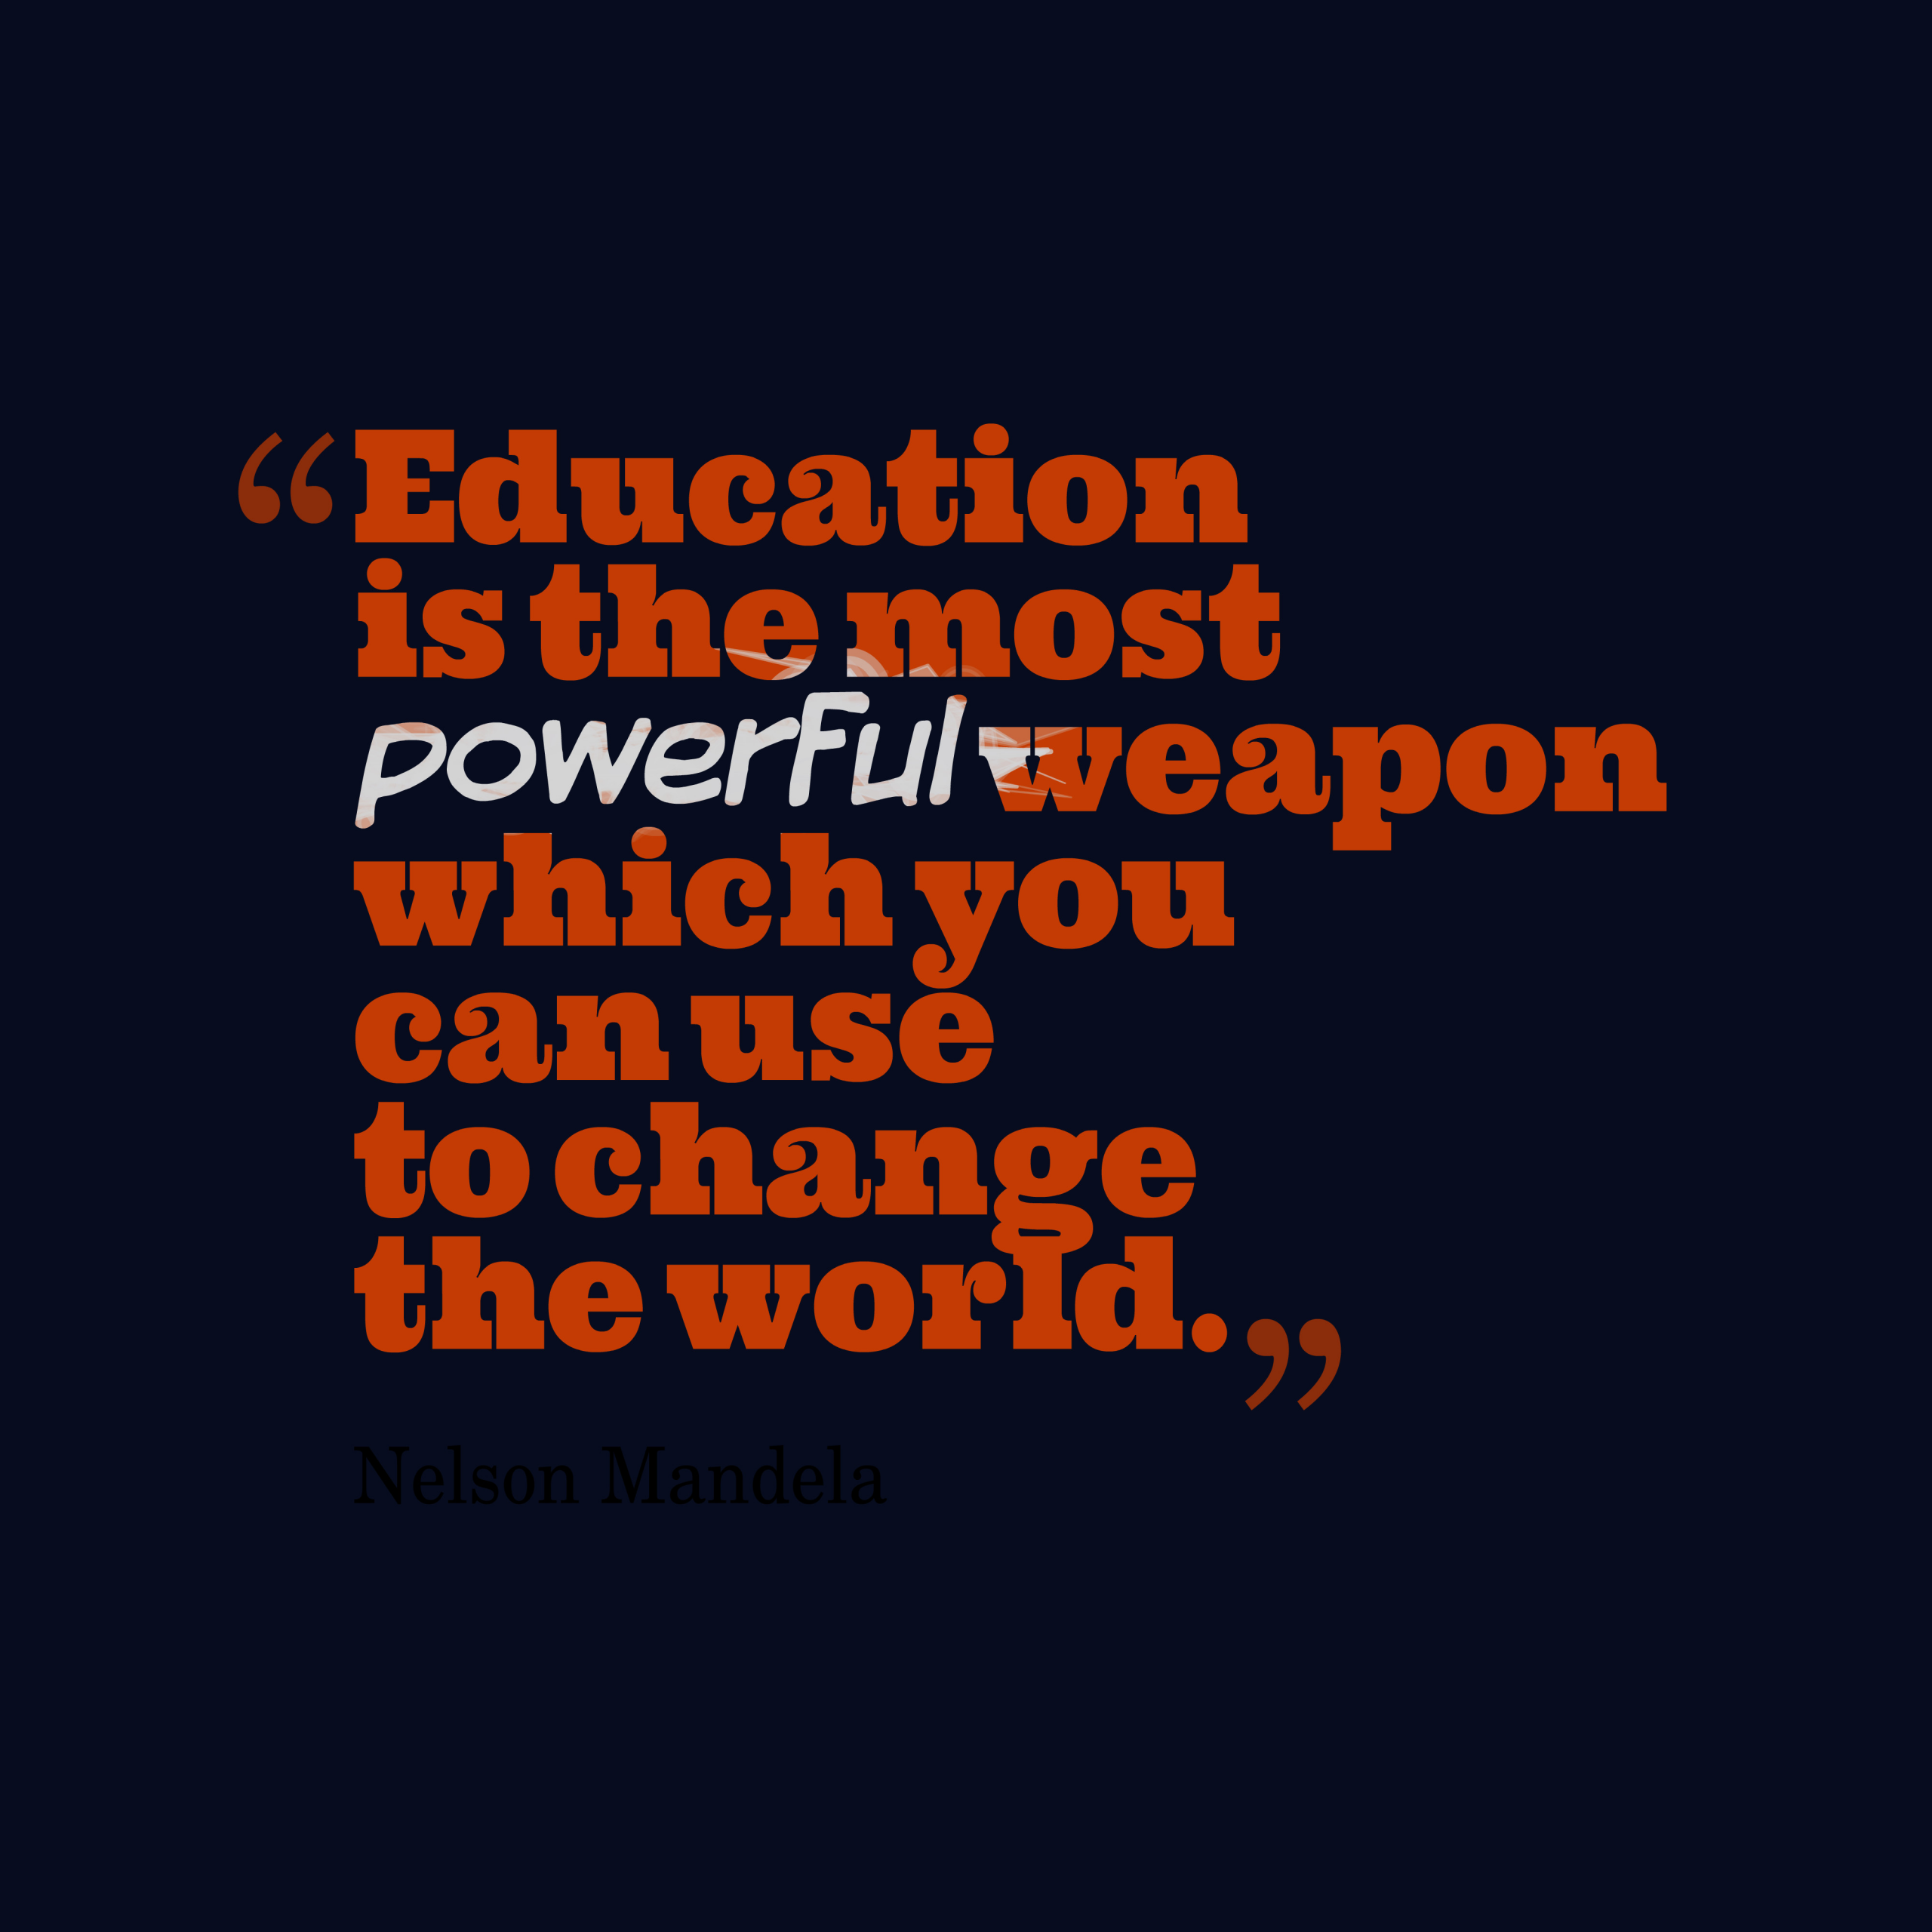 Nelson Mandela Quotes Education
 Nelson Mandela quote about education